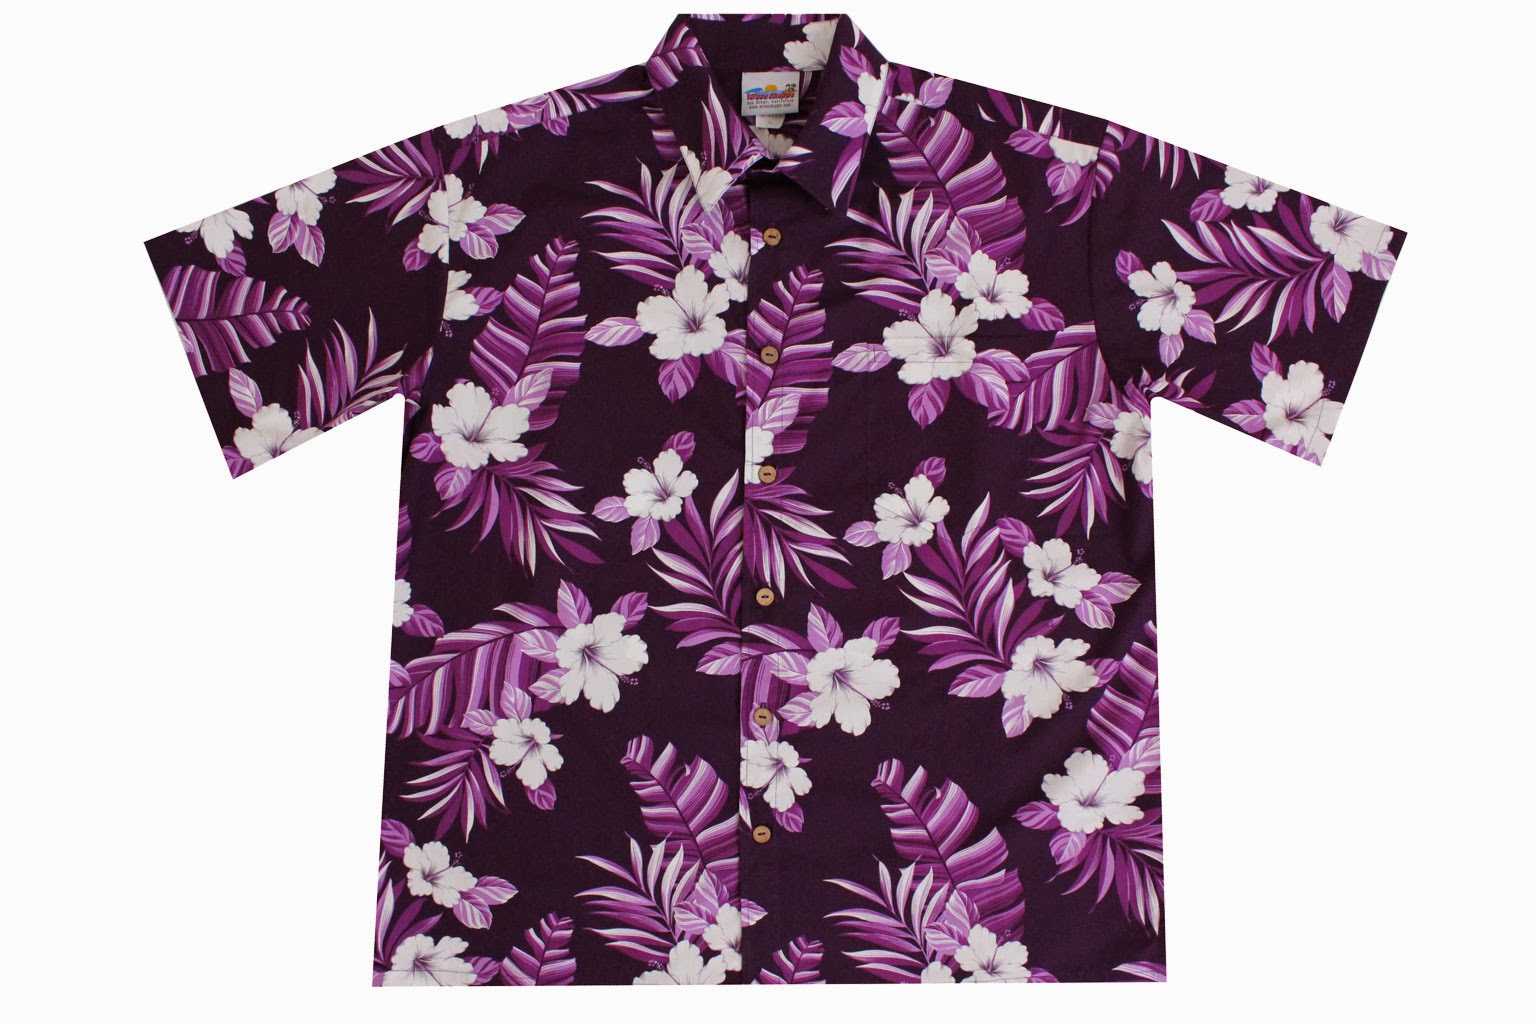 Da Kine Hawaiian Aloha: What color is your favorite Hawaiian Shirt?